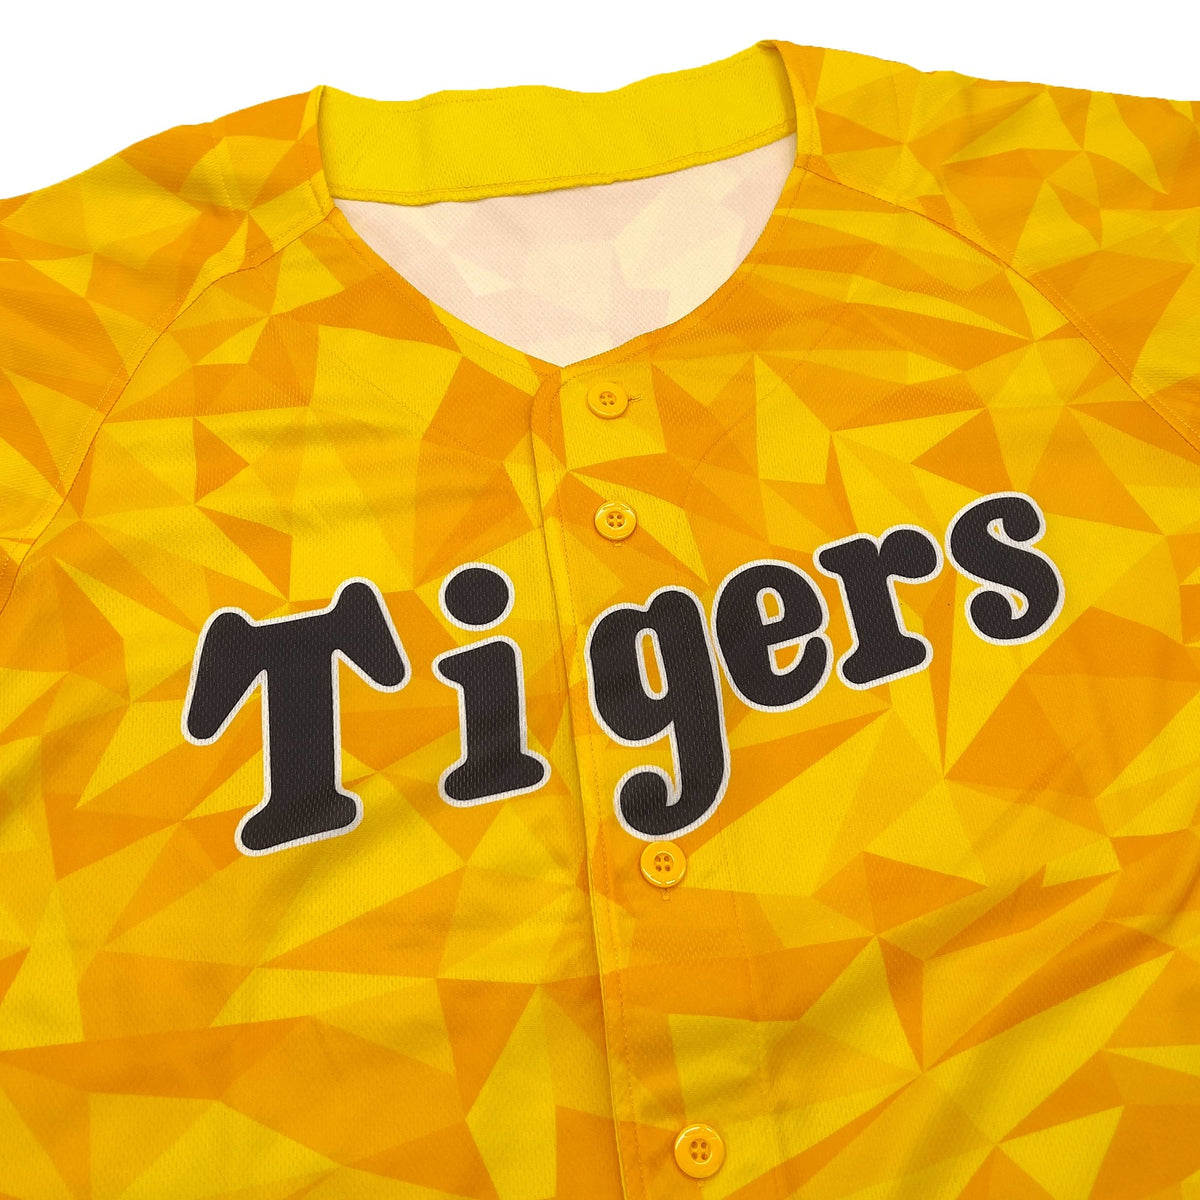 Hanshin Tigers Joshin Sponsor Cheap Jersey